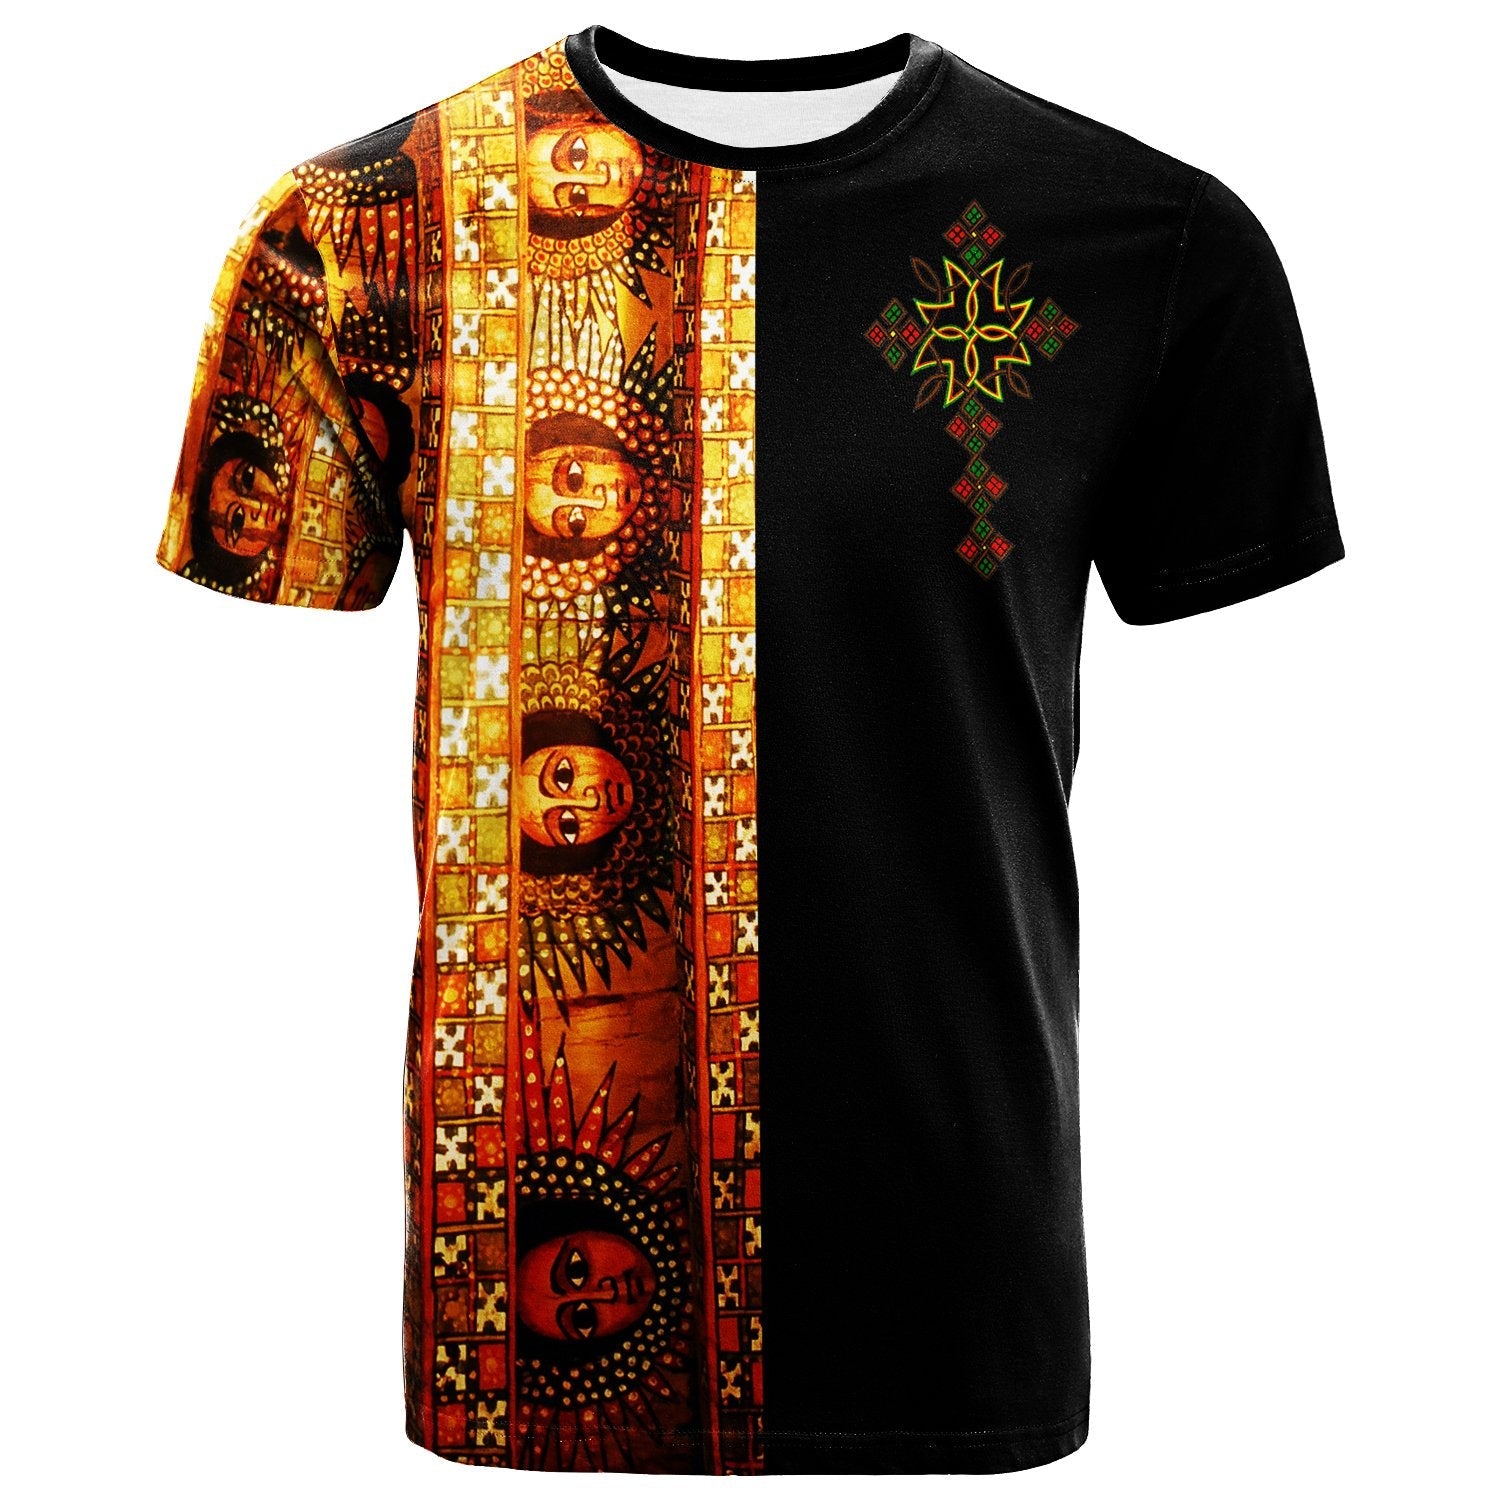 ethiopia-t-shirt-angel-with-cross